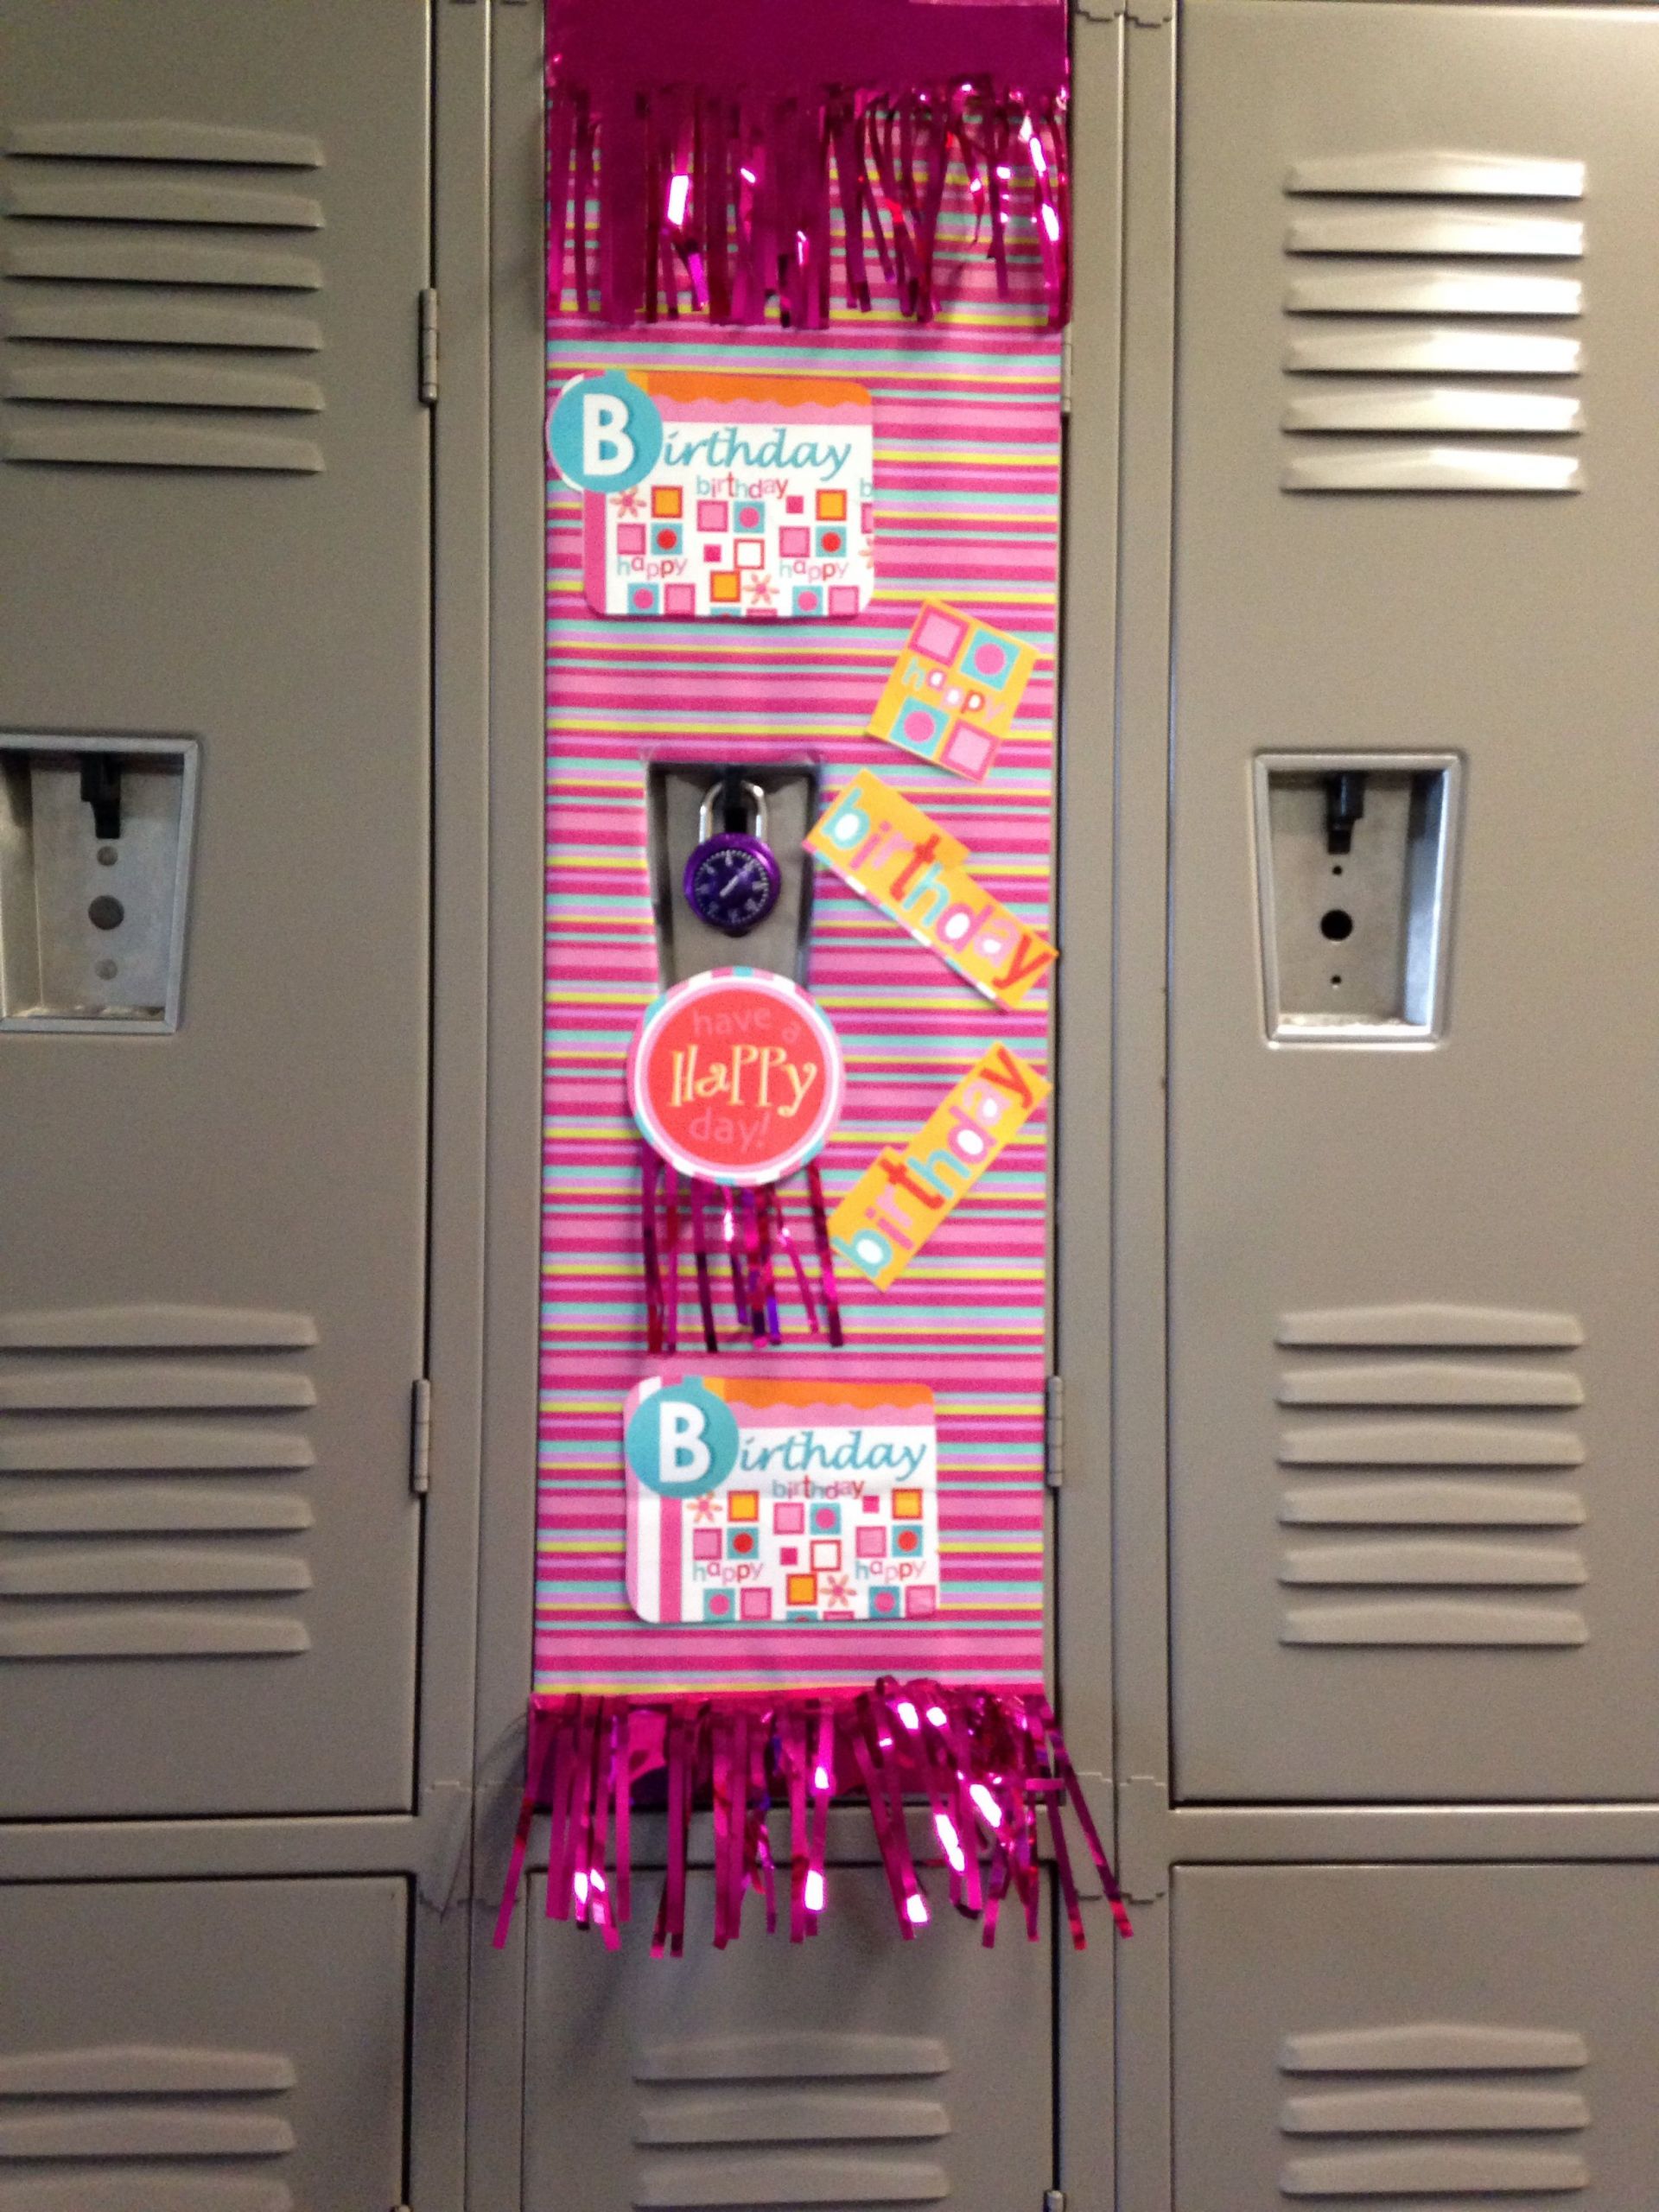 Decorated Lockers For Birthdays
 Decorate your locker for birthdays